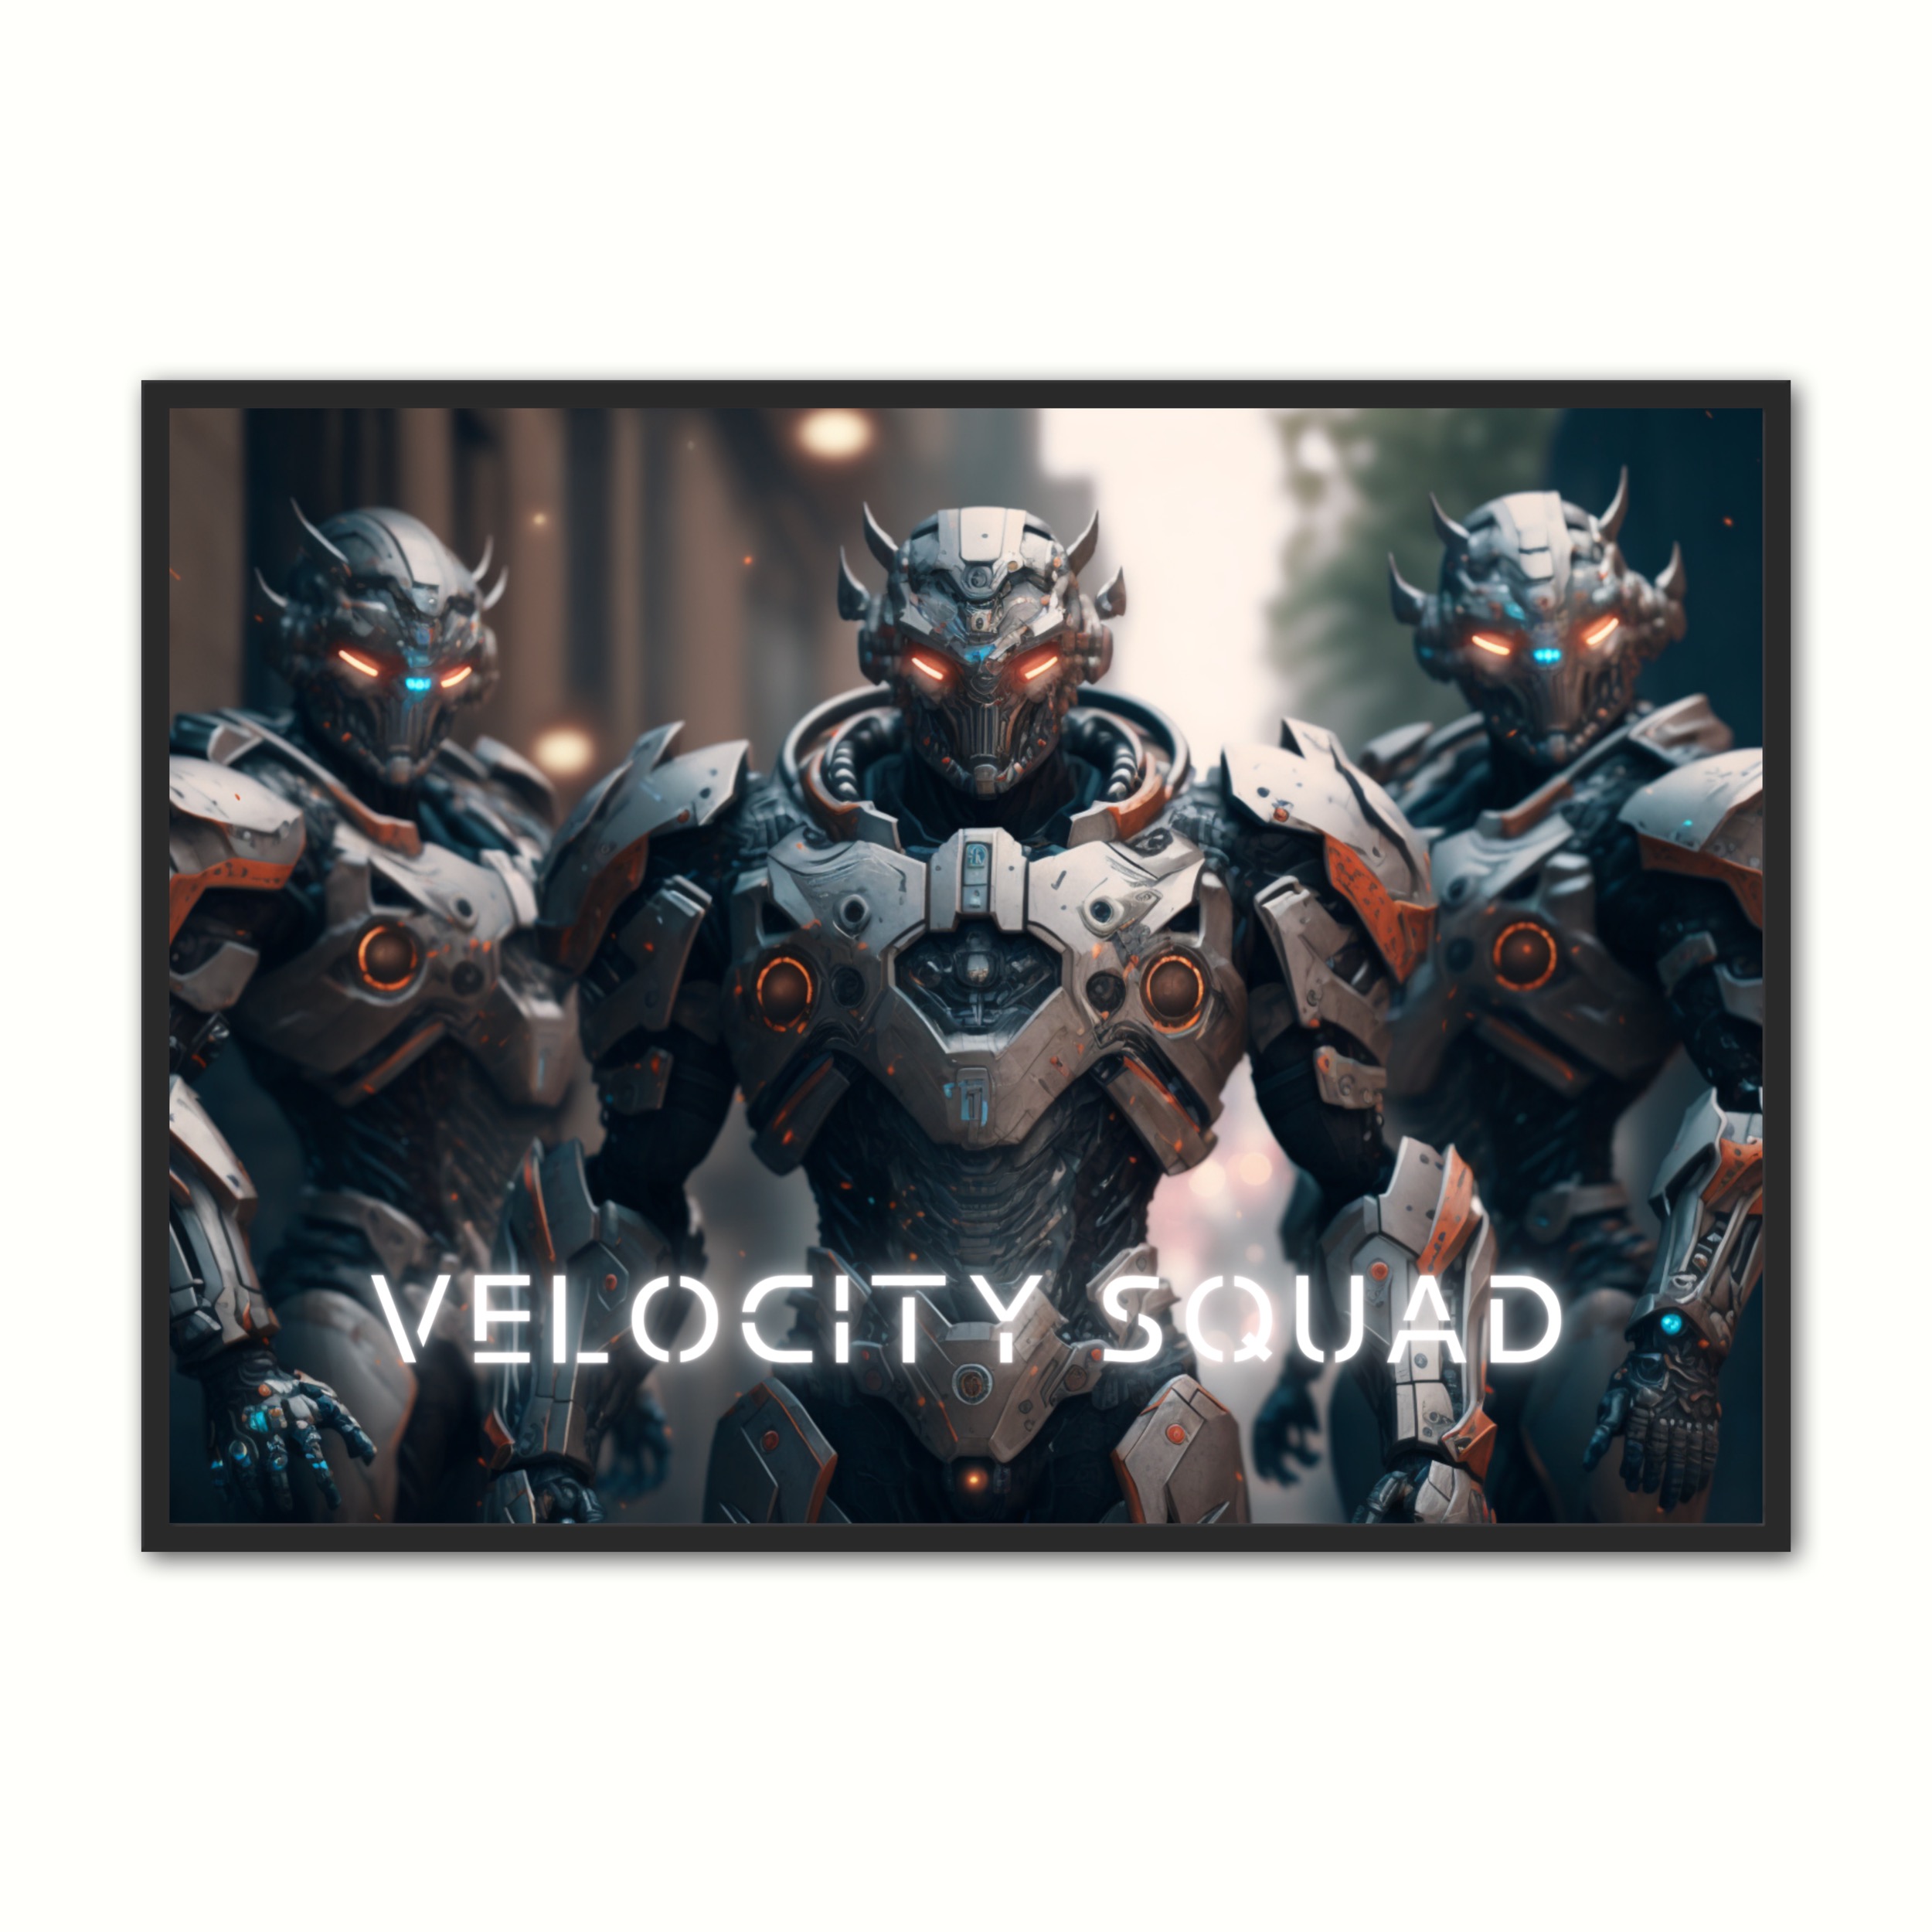 Se Plakat med Velocity Squad - Android 21 x 29,7 cm (A4) hos Nyplakat.dk